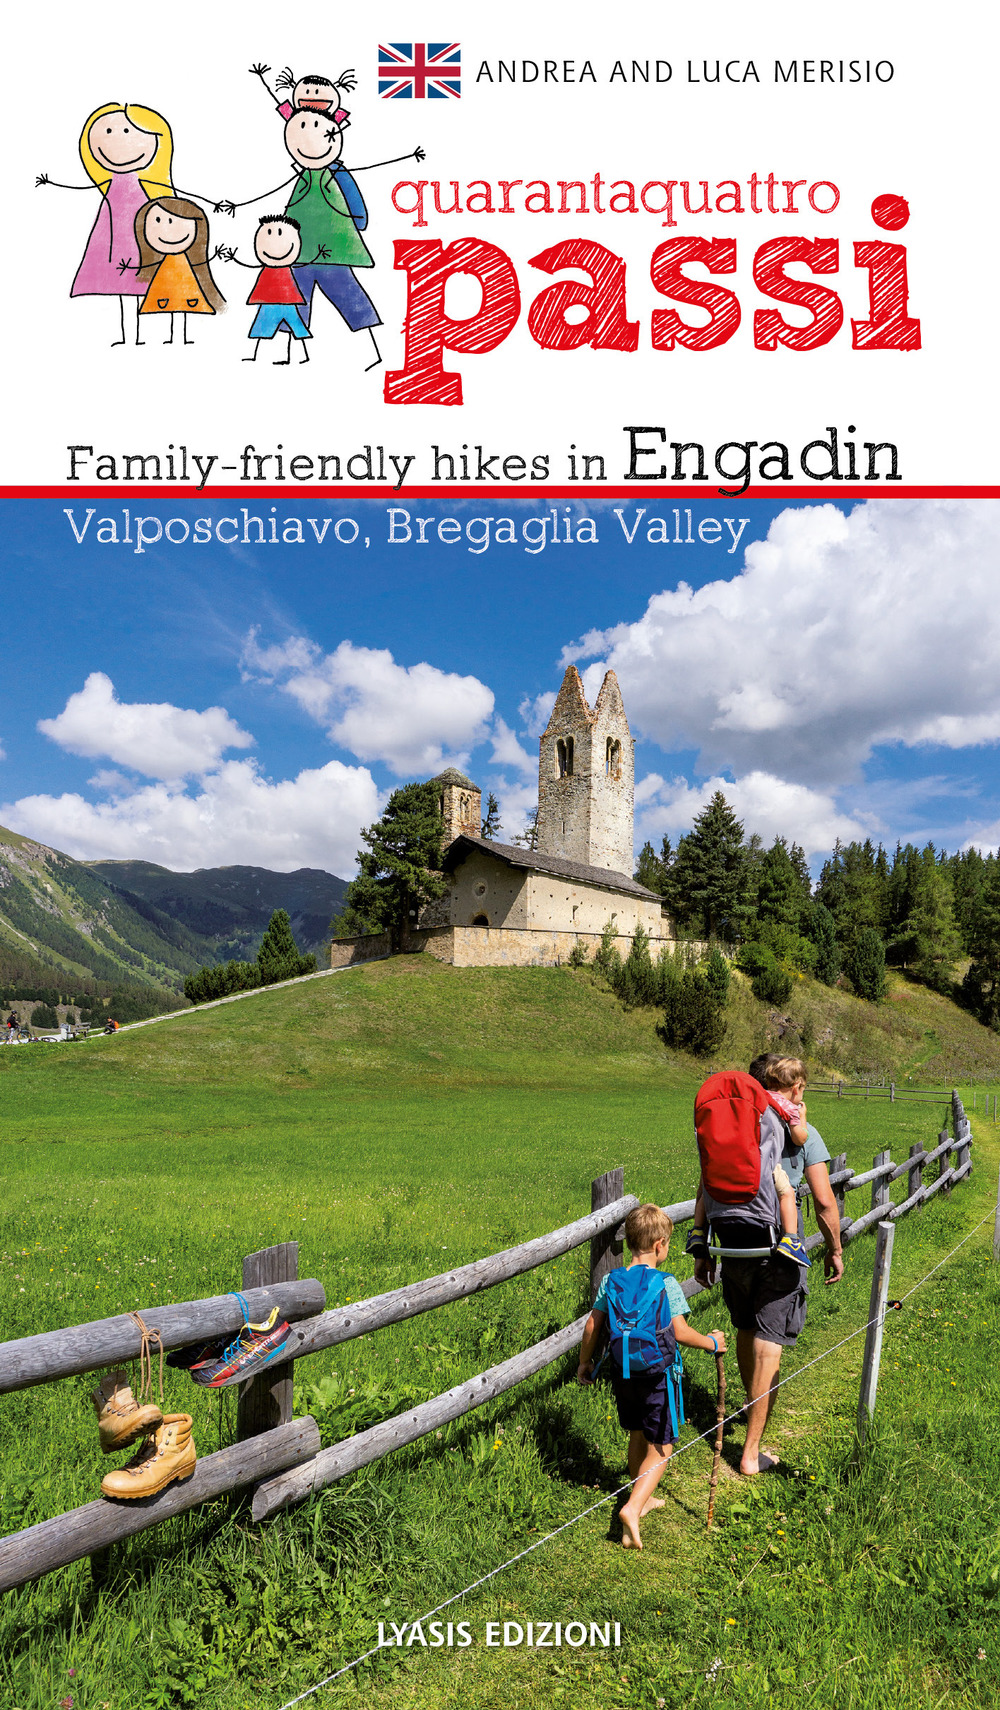 44 passi. Itinerari per famiglie in Engadina, val Bregaglia, Valposchiavo. Ediz. inglese